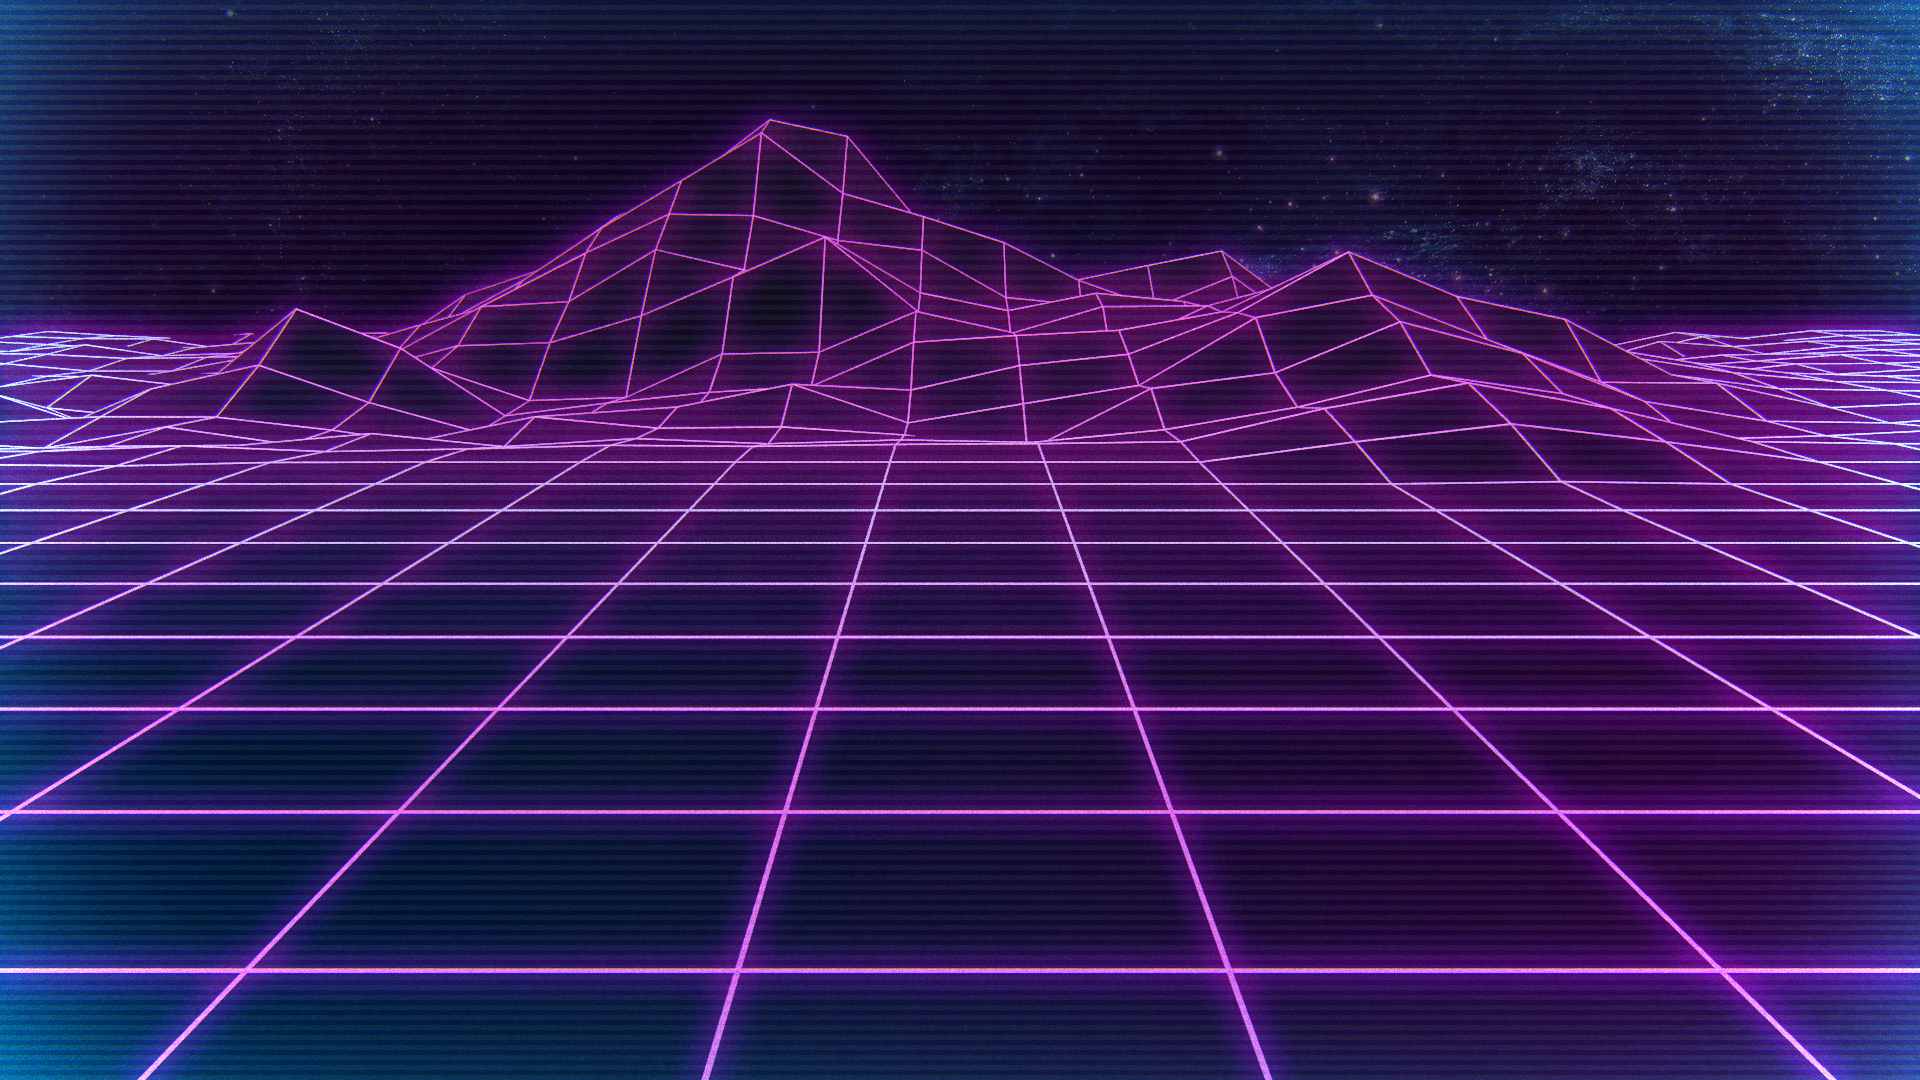 General 1920x1080 digital art artwork 1980s neon retrowave purple purple background grid mountains synthwave lines futuristic pink